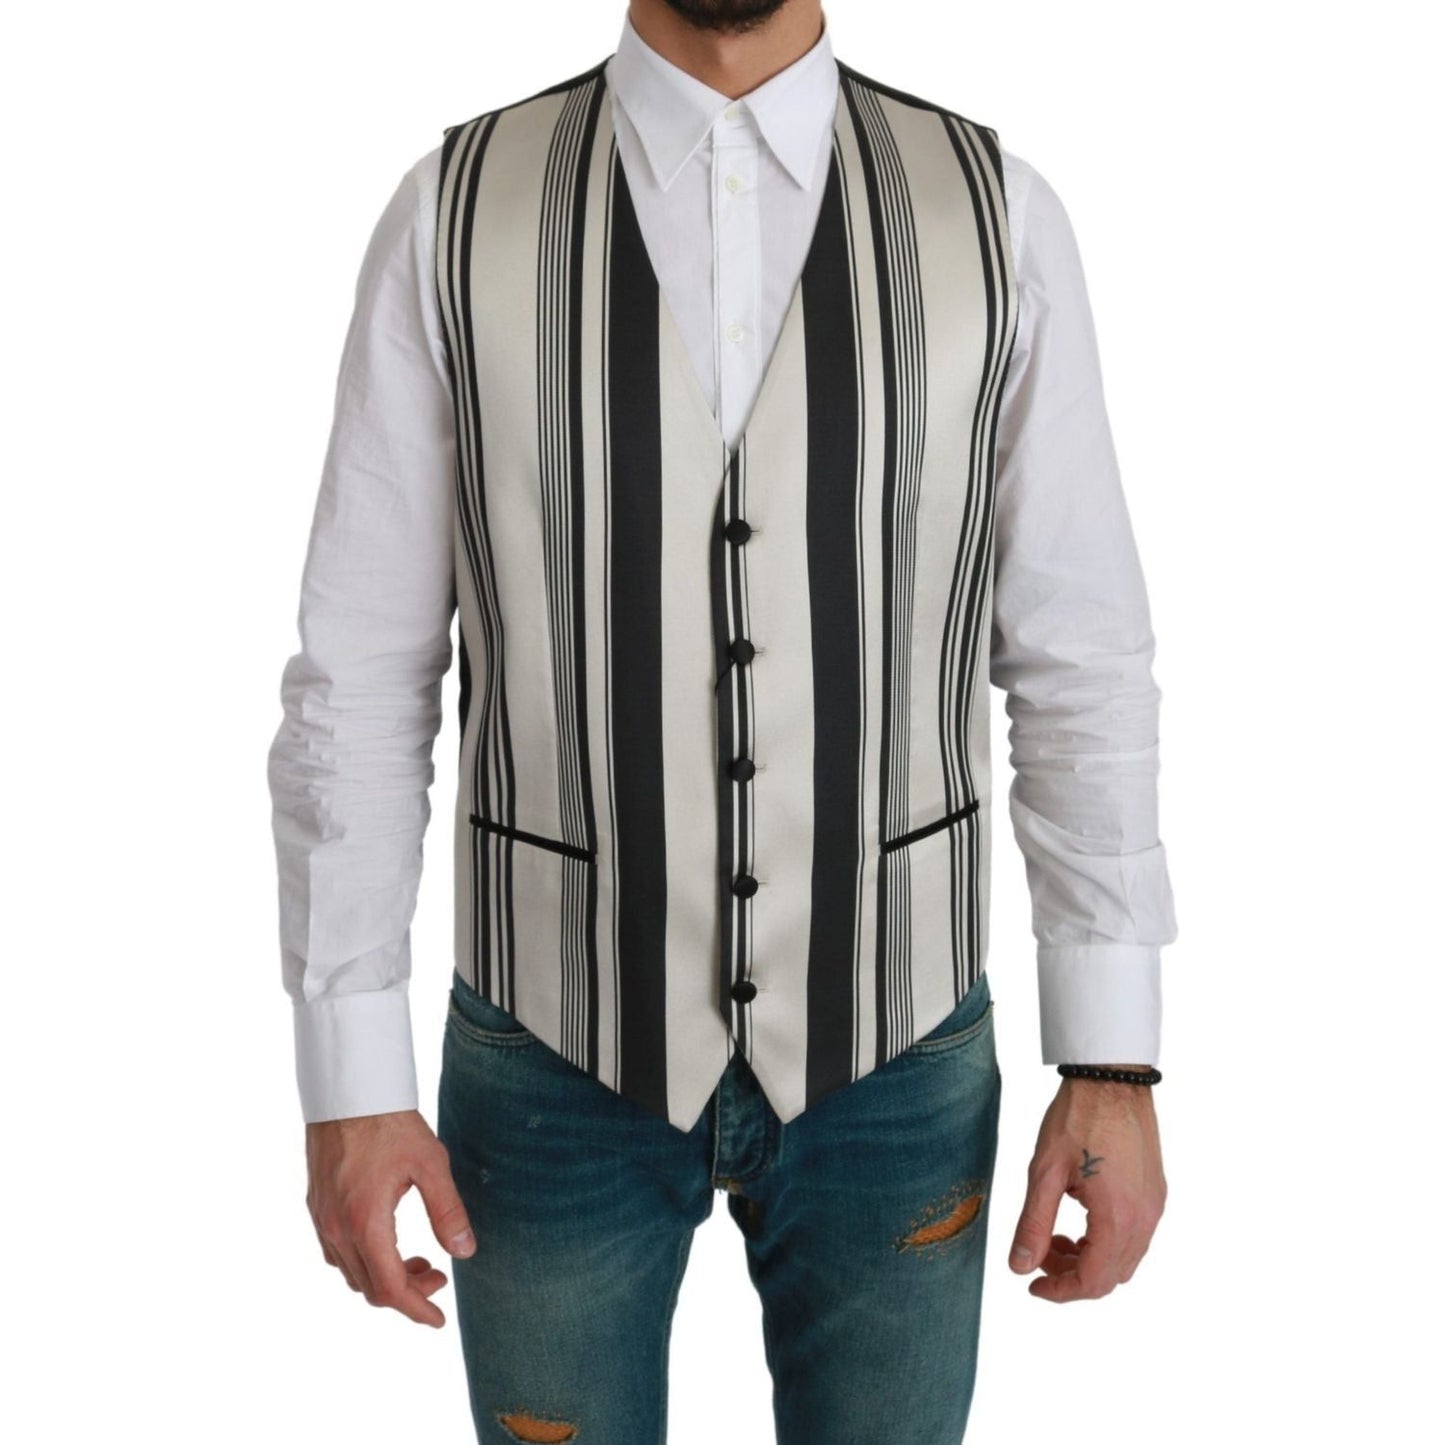 Dolce & Gabbana Stripe Cotton Silk Dress Vest white-black-stripes-waistcoat-formal-vest IMG_0341-scaled-ac18bcd8-814.jpg